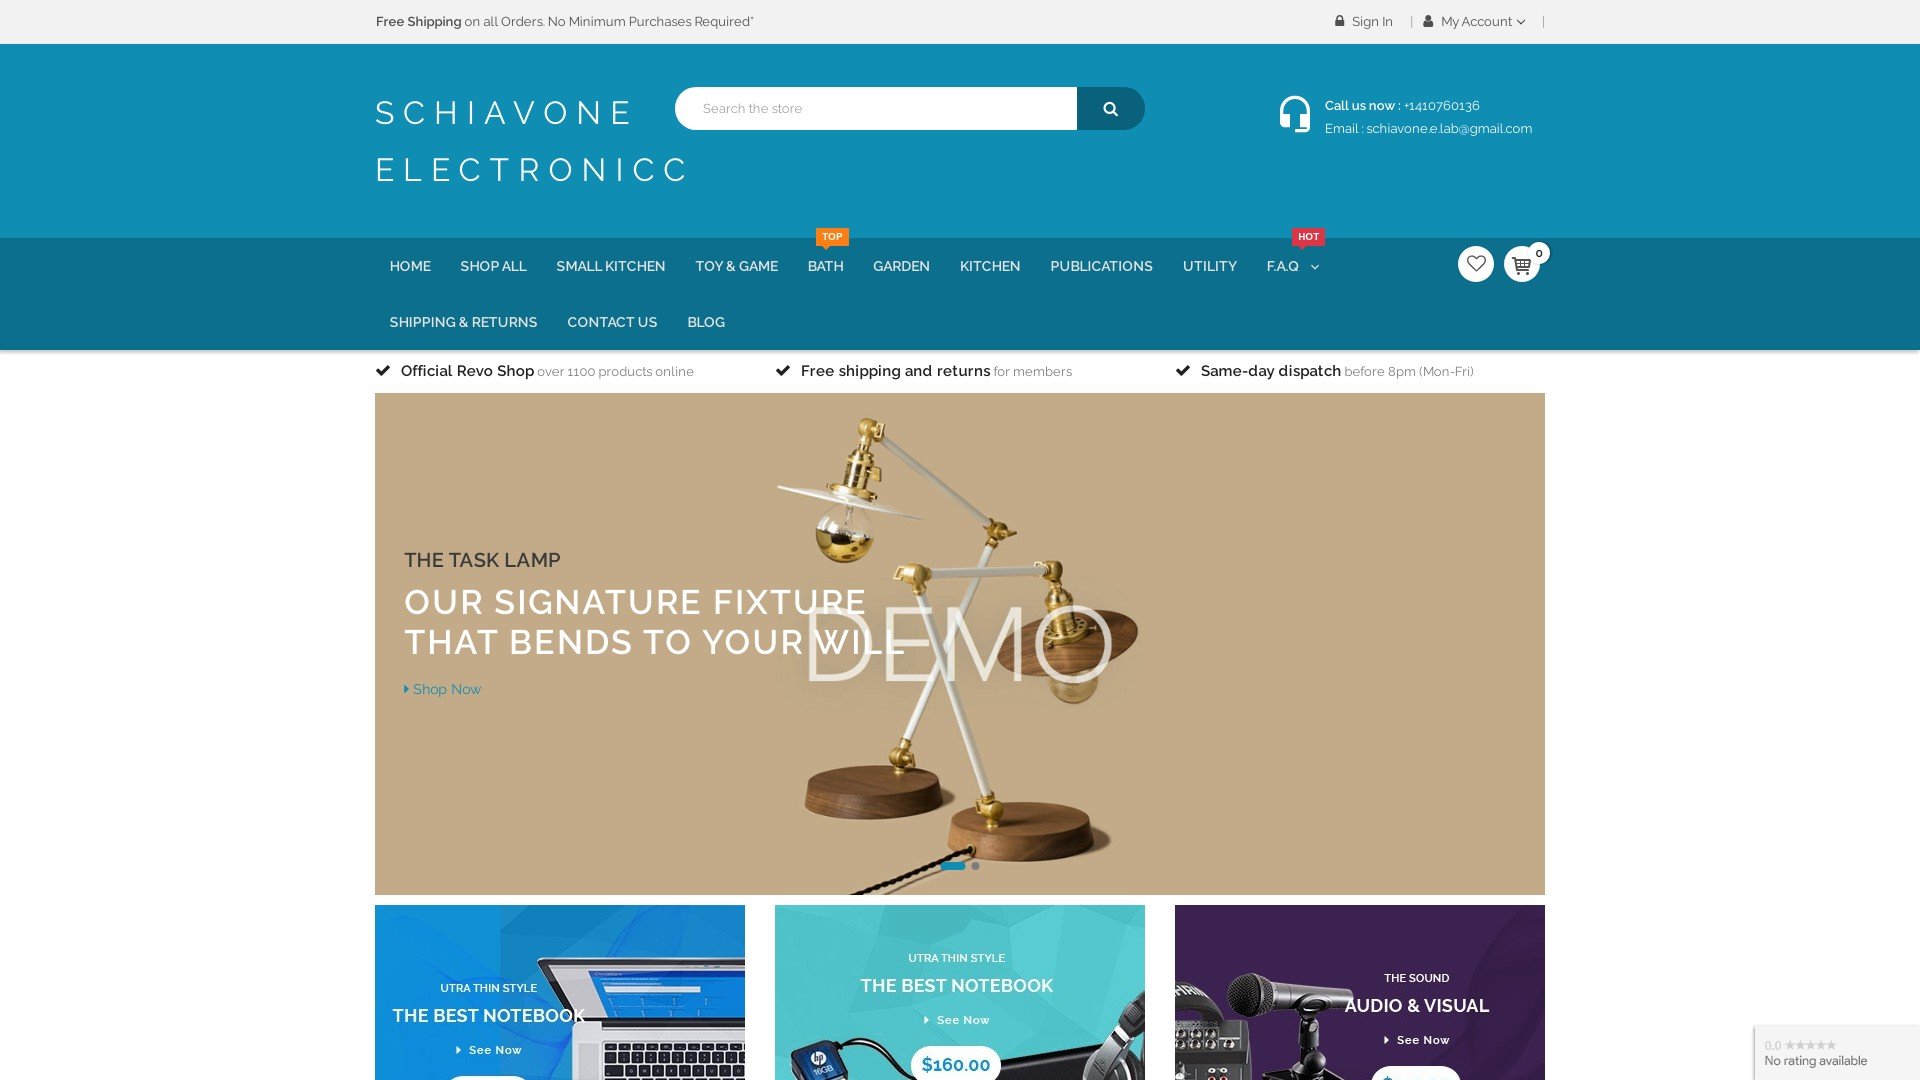 Schiavone Electronic located at schiavone-electronicc.mybigcommerce.com